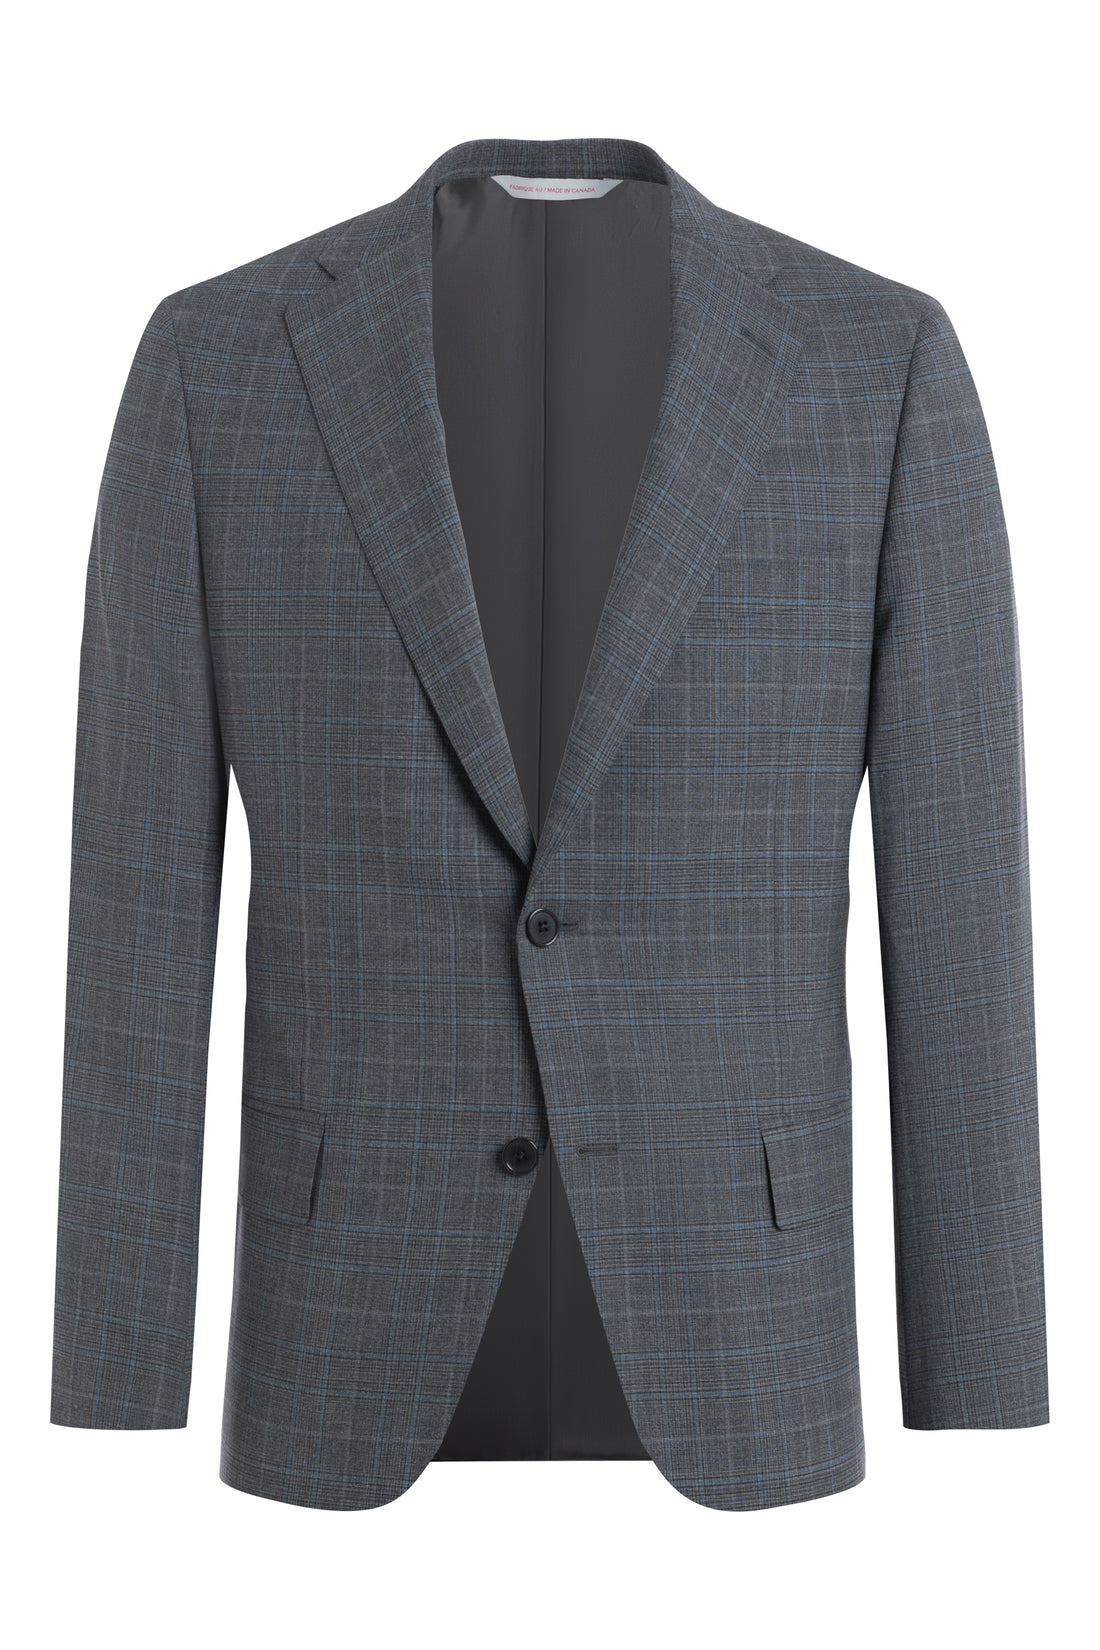 Slate Zegna Wool Plaid Suit